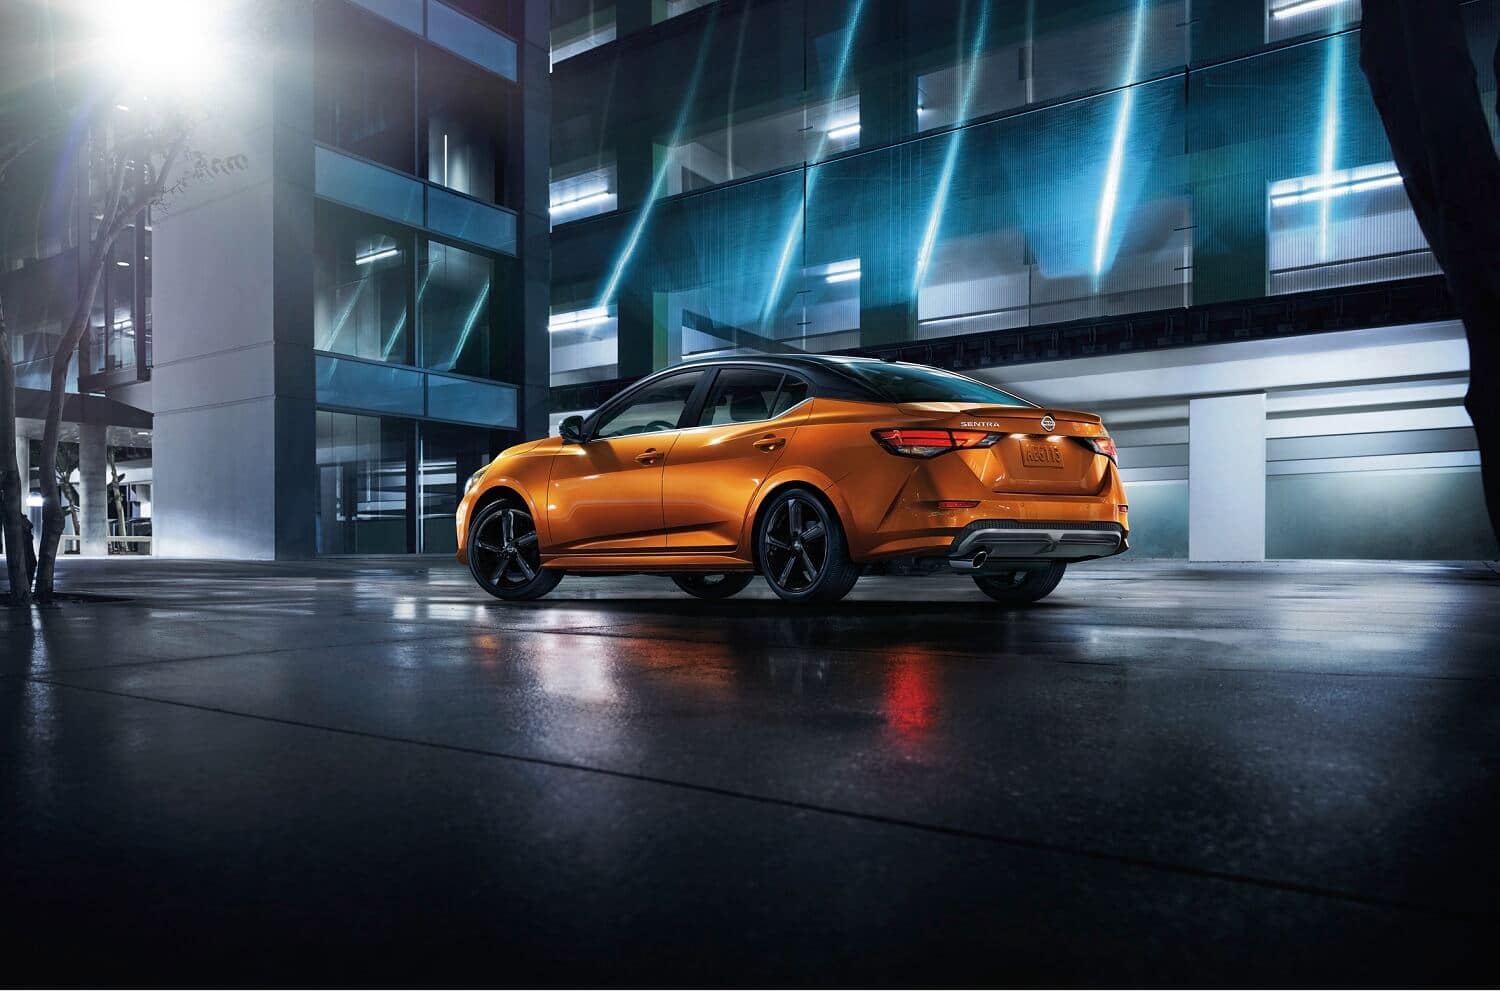 2021 Nissan Sentra Rear in Two-Tone Monarch Orange Metallic and Super Black